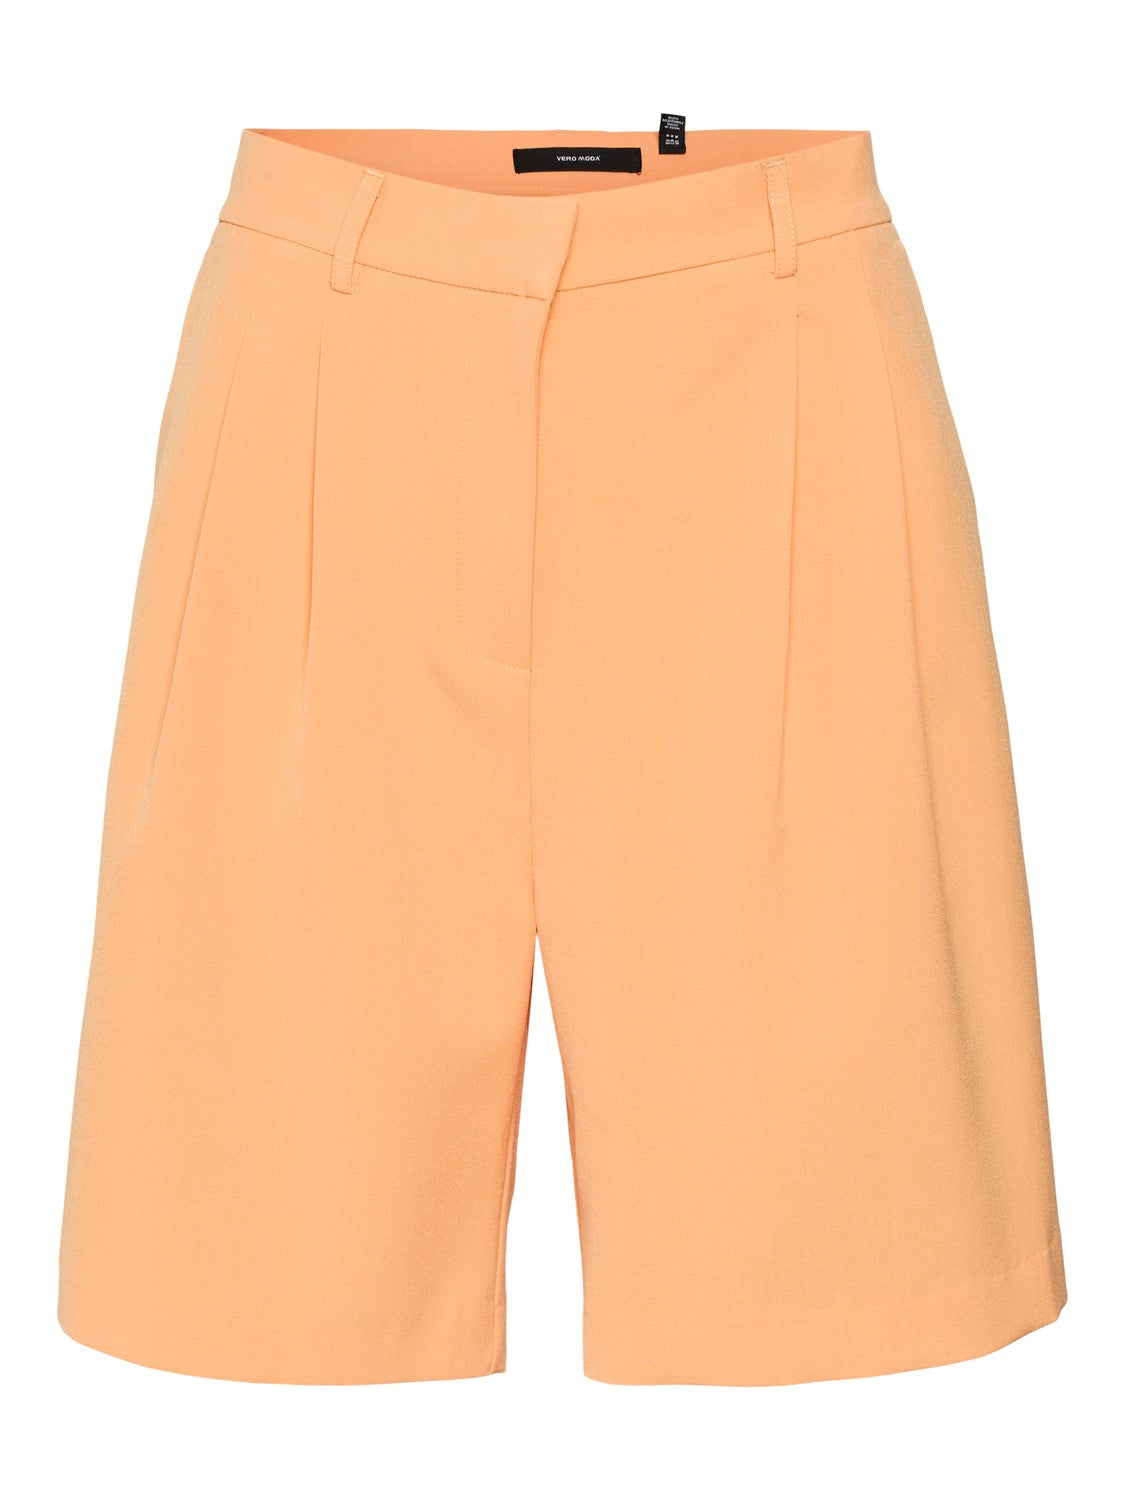 Troian Orange Tailored Shorts